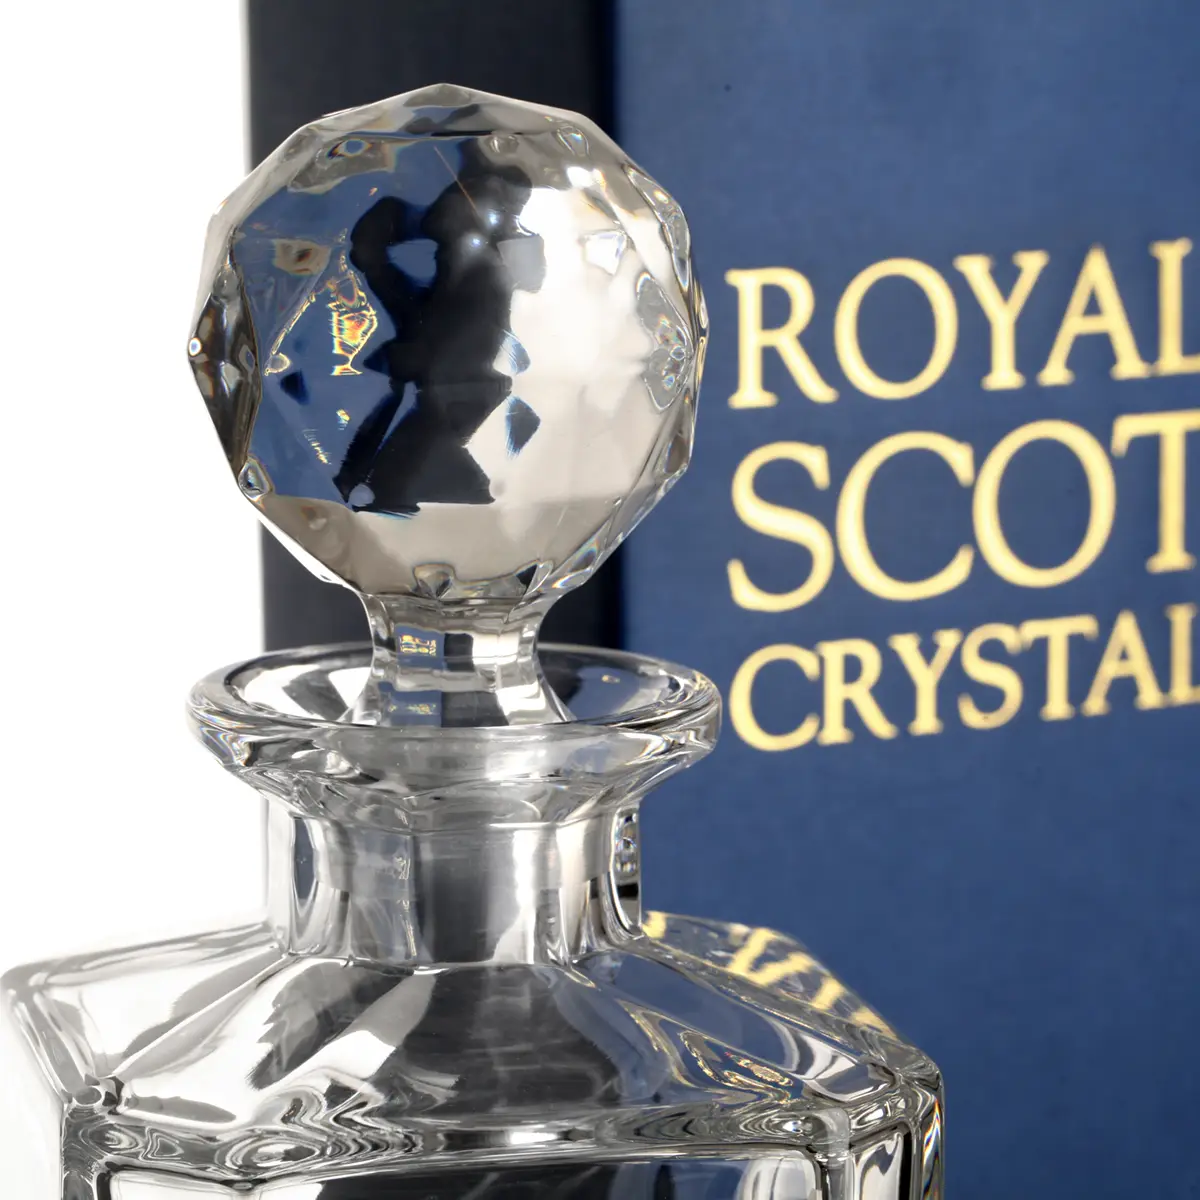 Classic Collection Kristall Whisky Set - Karaffe & 2 Gläser - Handgefertigt aus Kristallglas